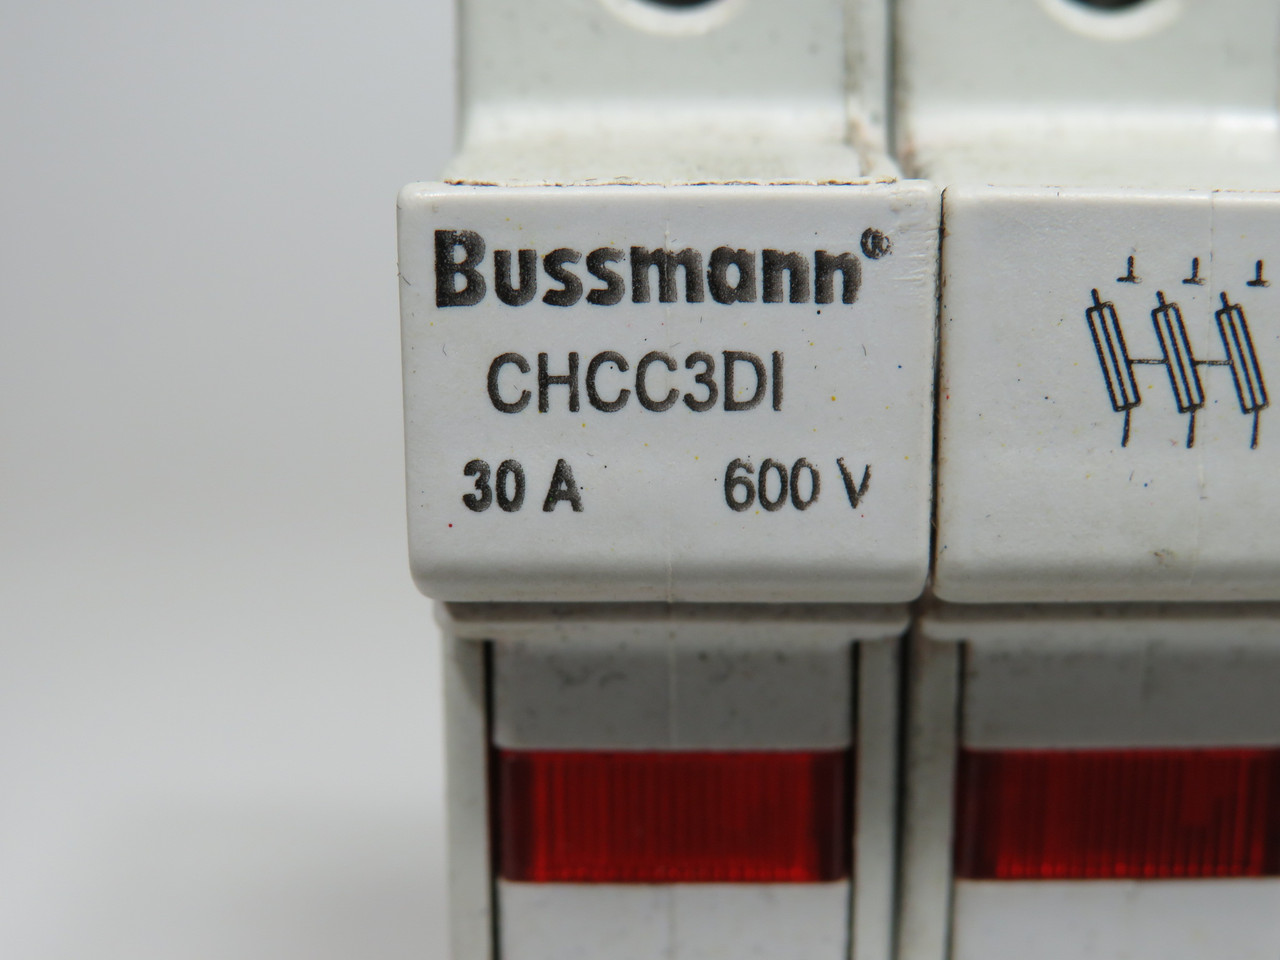 Bussmann CHCC3DI Indicating Fuse Holder 3-Pole 30A 600V USED